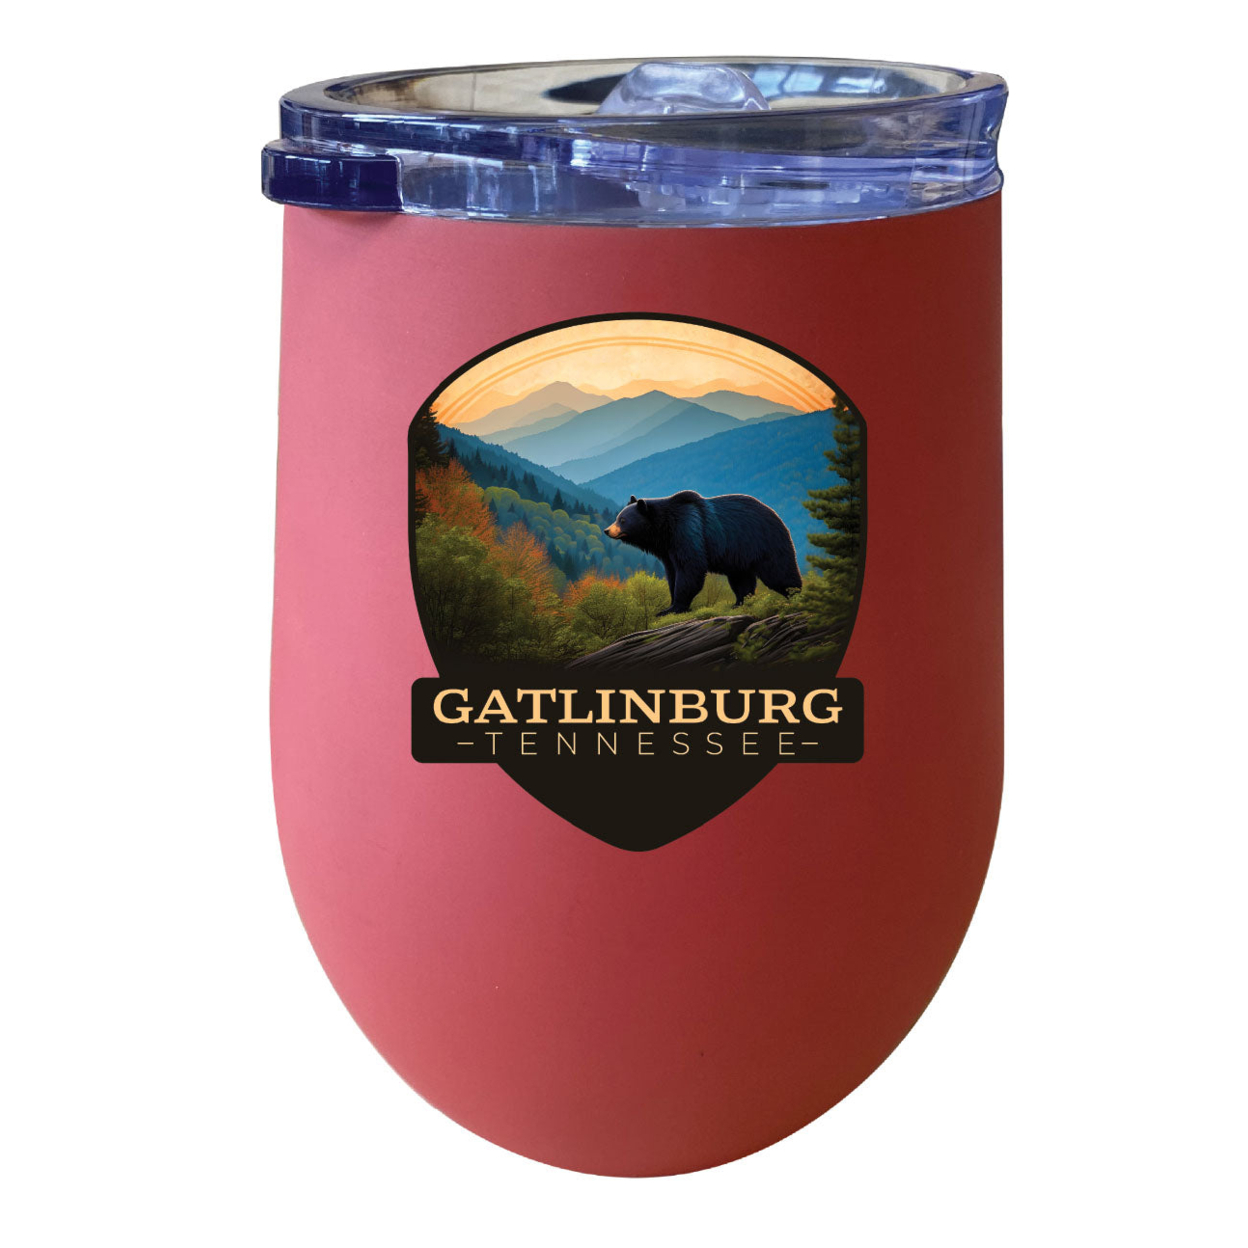 Gatlinburg Tennessee Souvenir 12 Oz Insulated Wine Stainless Steel Tumbler - Black, A